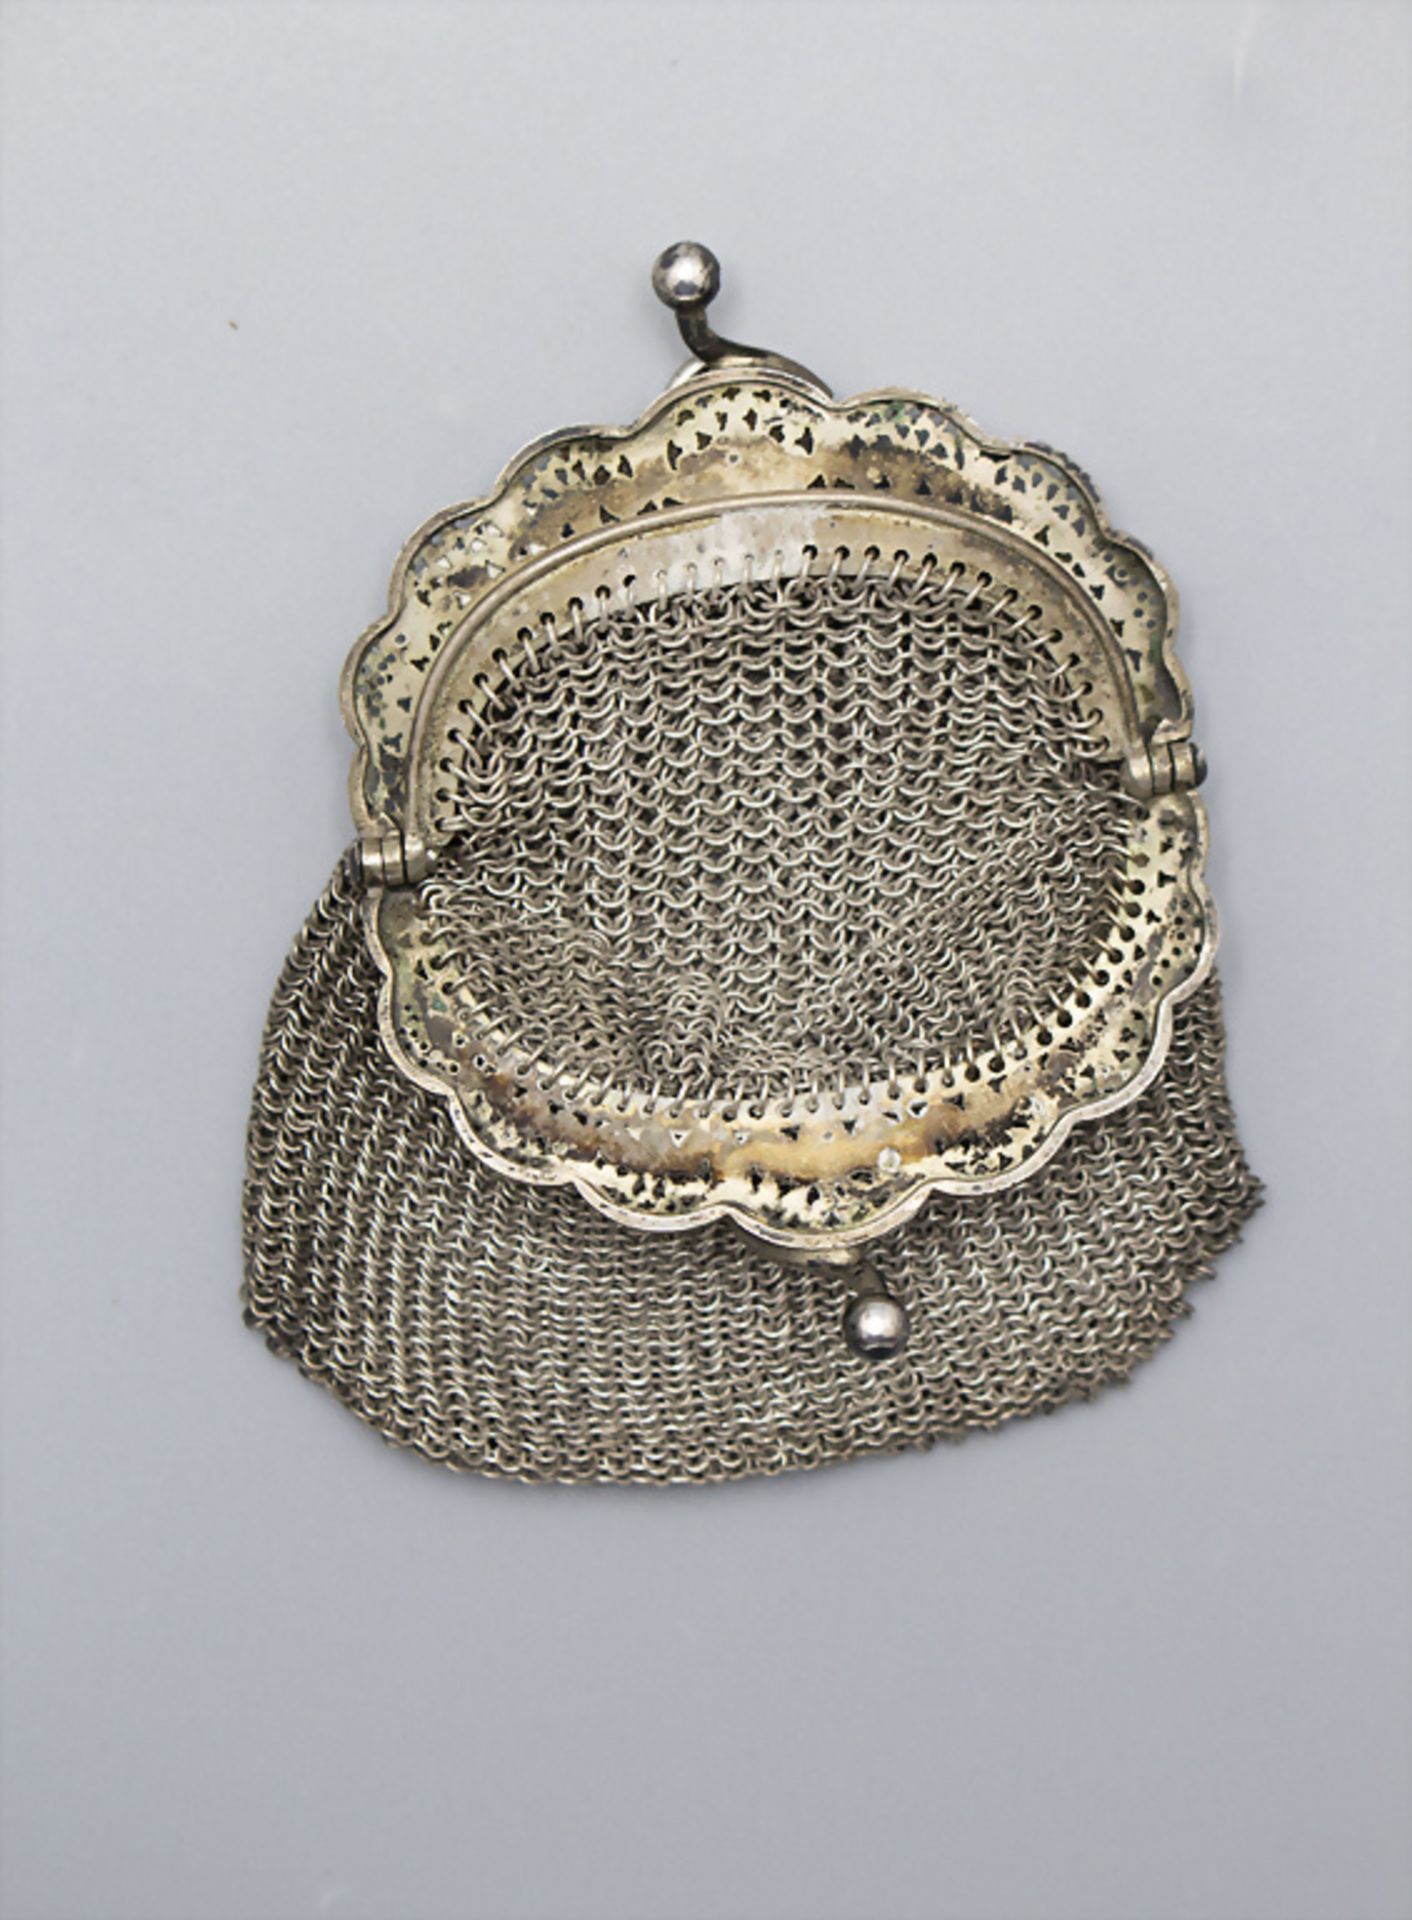 Silberbörse / A silver chain bag, Frankreich, um 1880 - Image 2 of 2